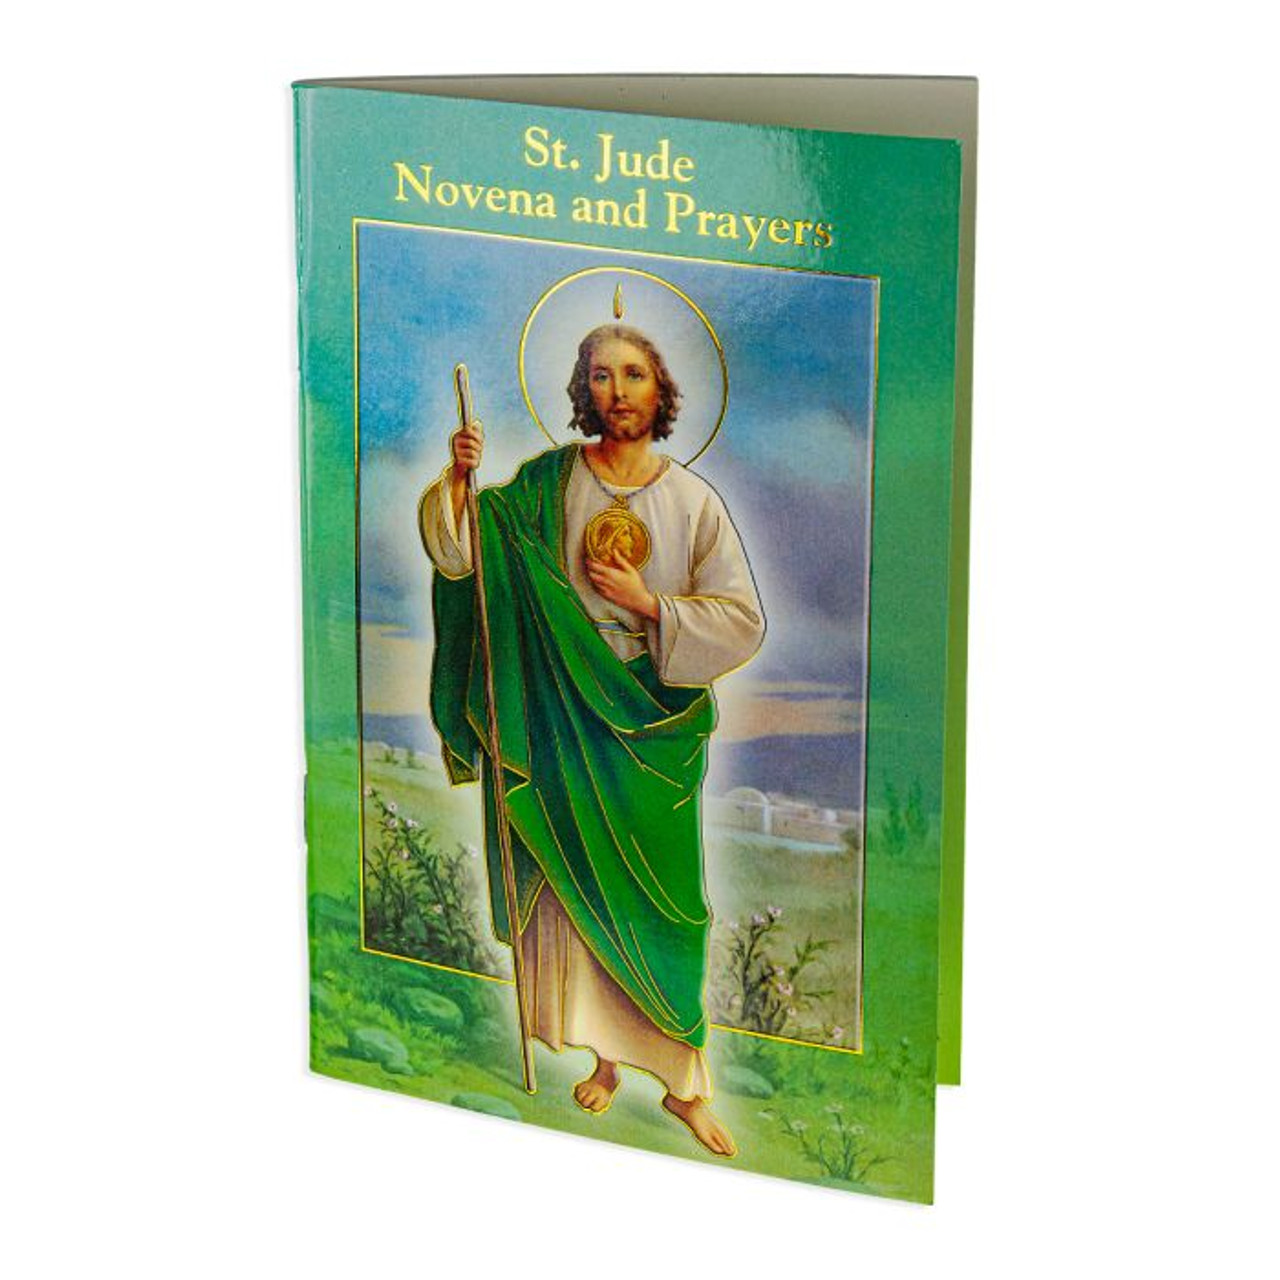 Saint Jude Novena and Prayer Book